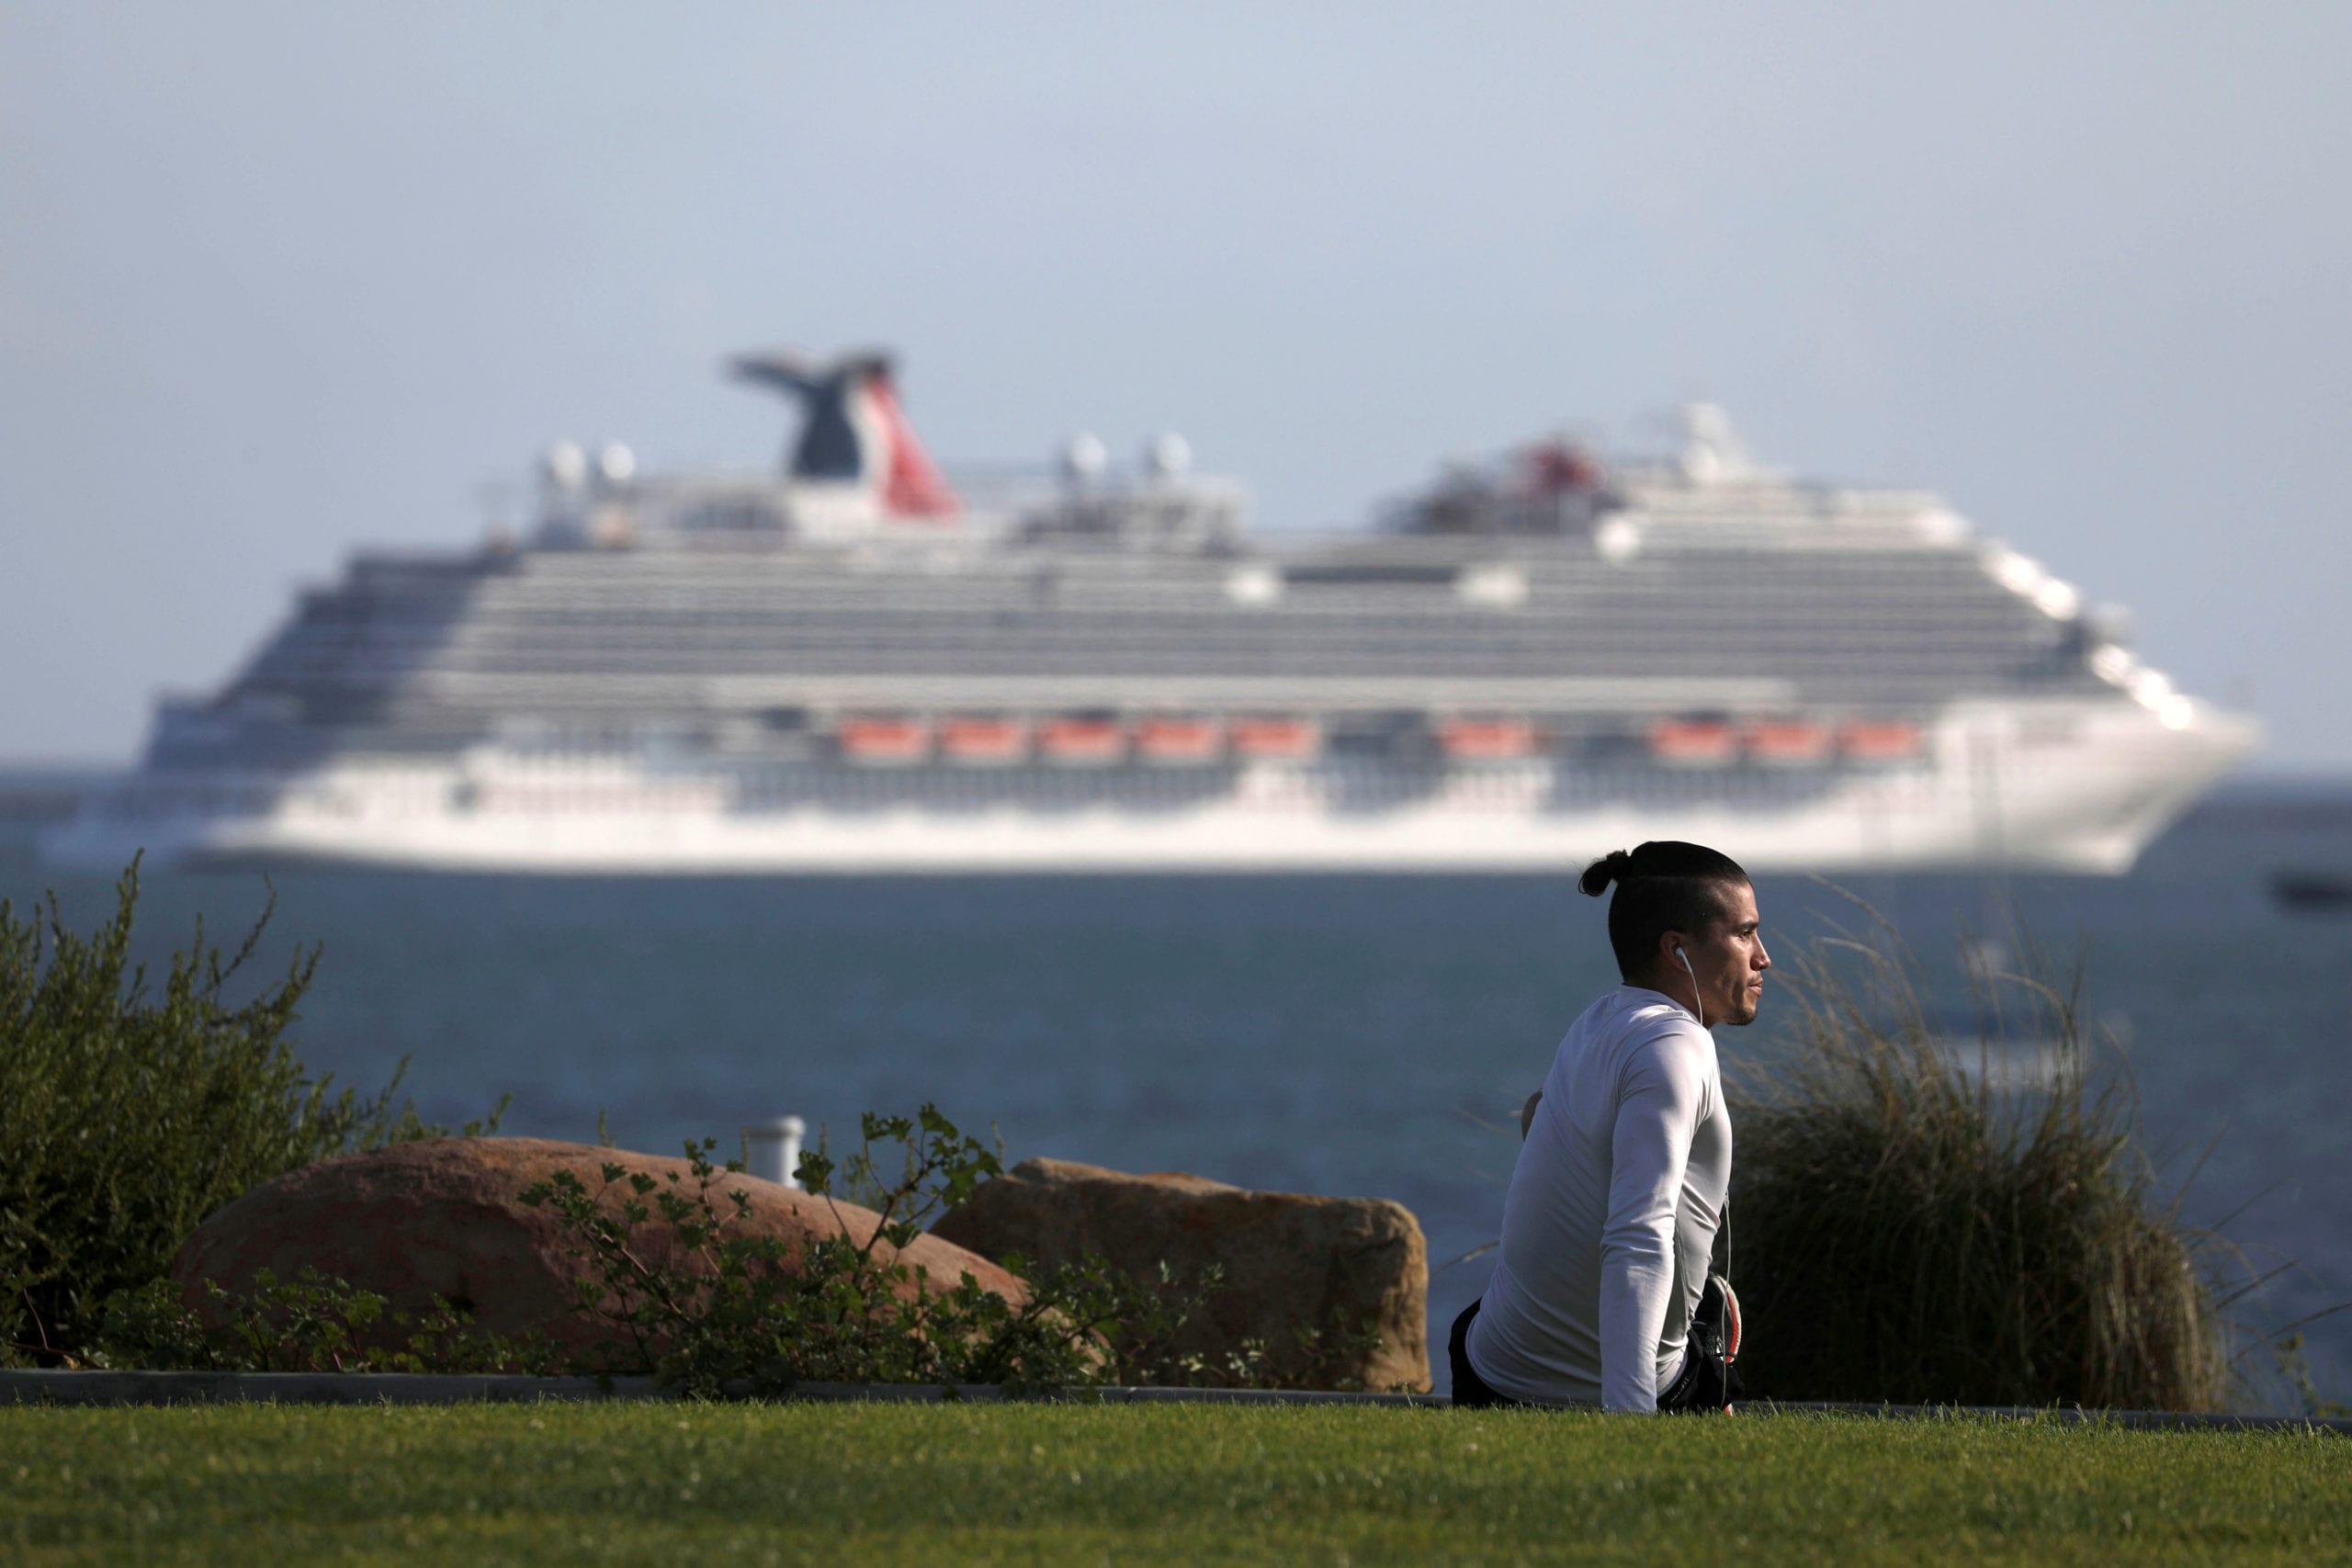 Cruise Lines Extend U.S. Sailing Suspension Until 2021